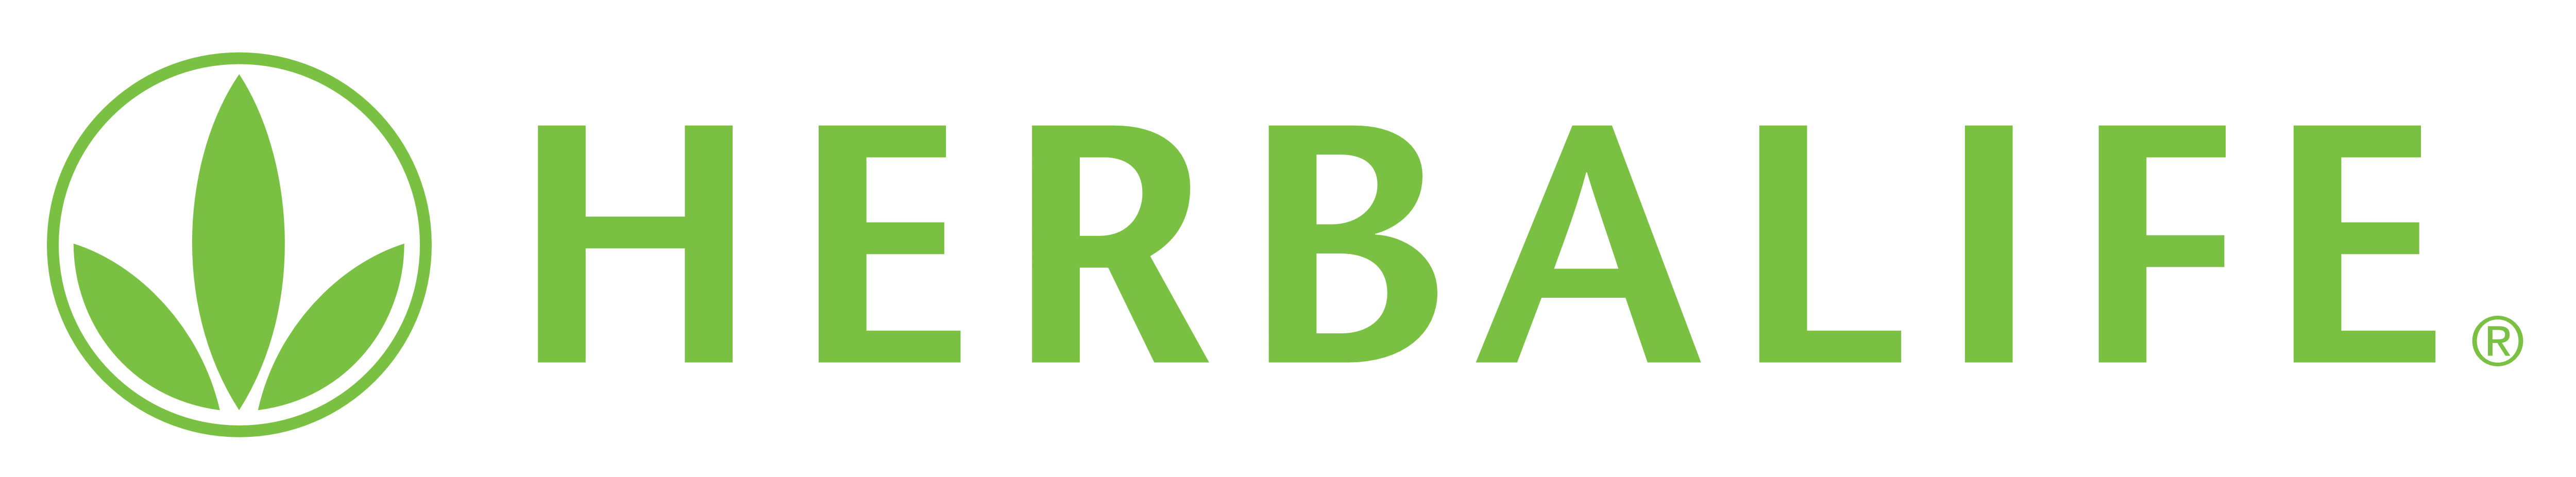 Herbalife Logo png